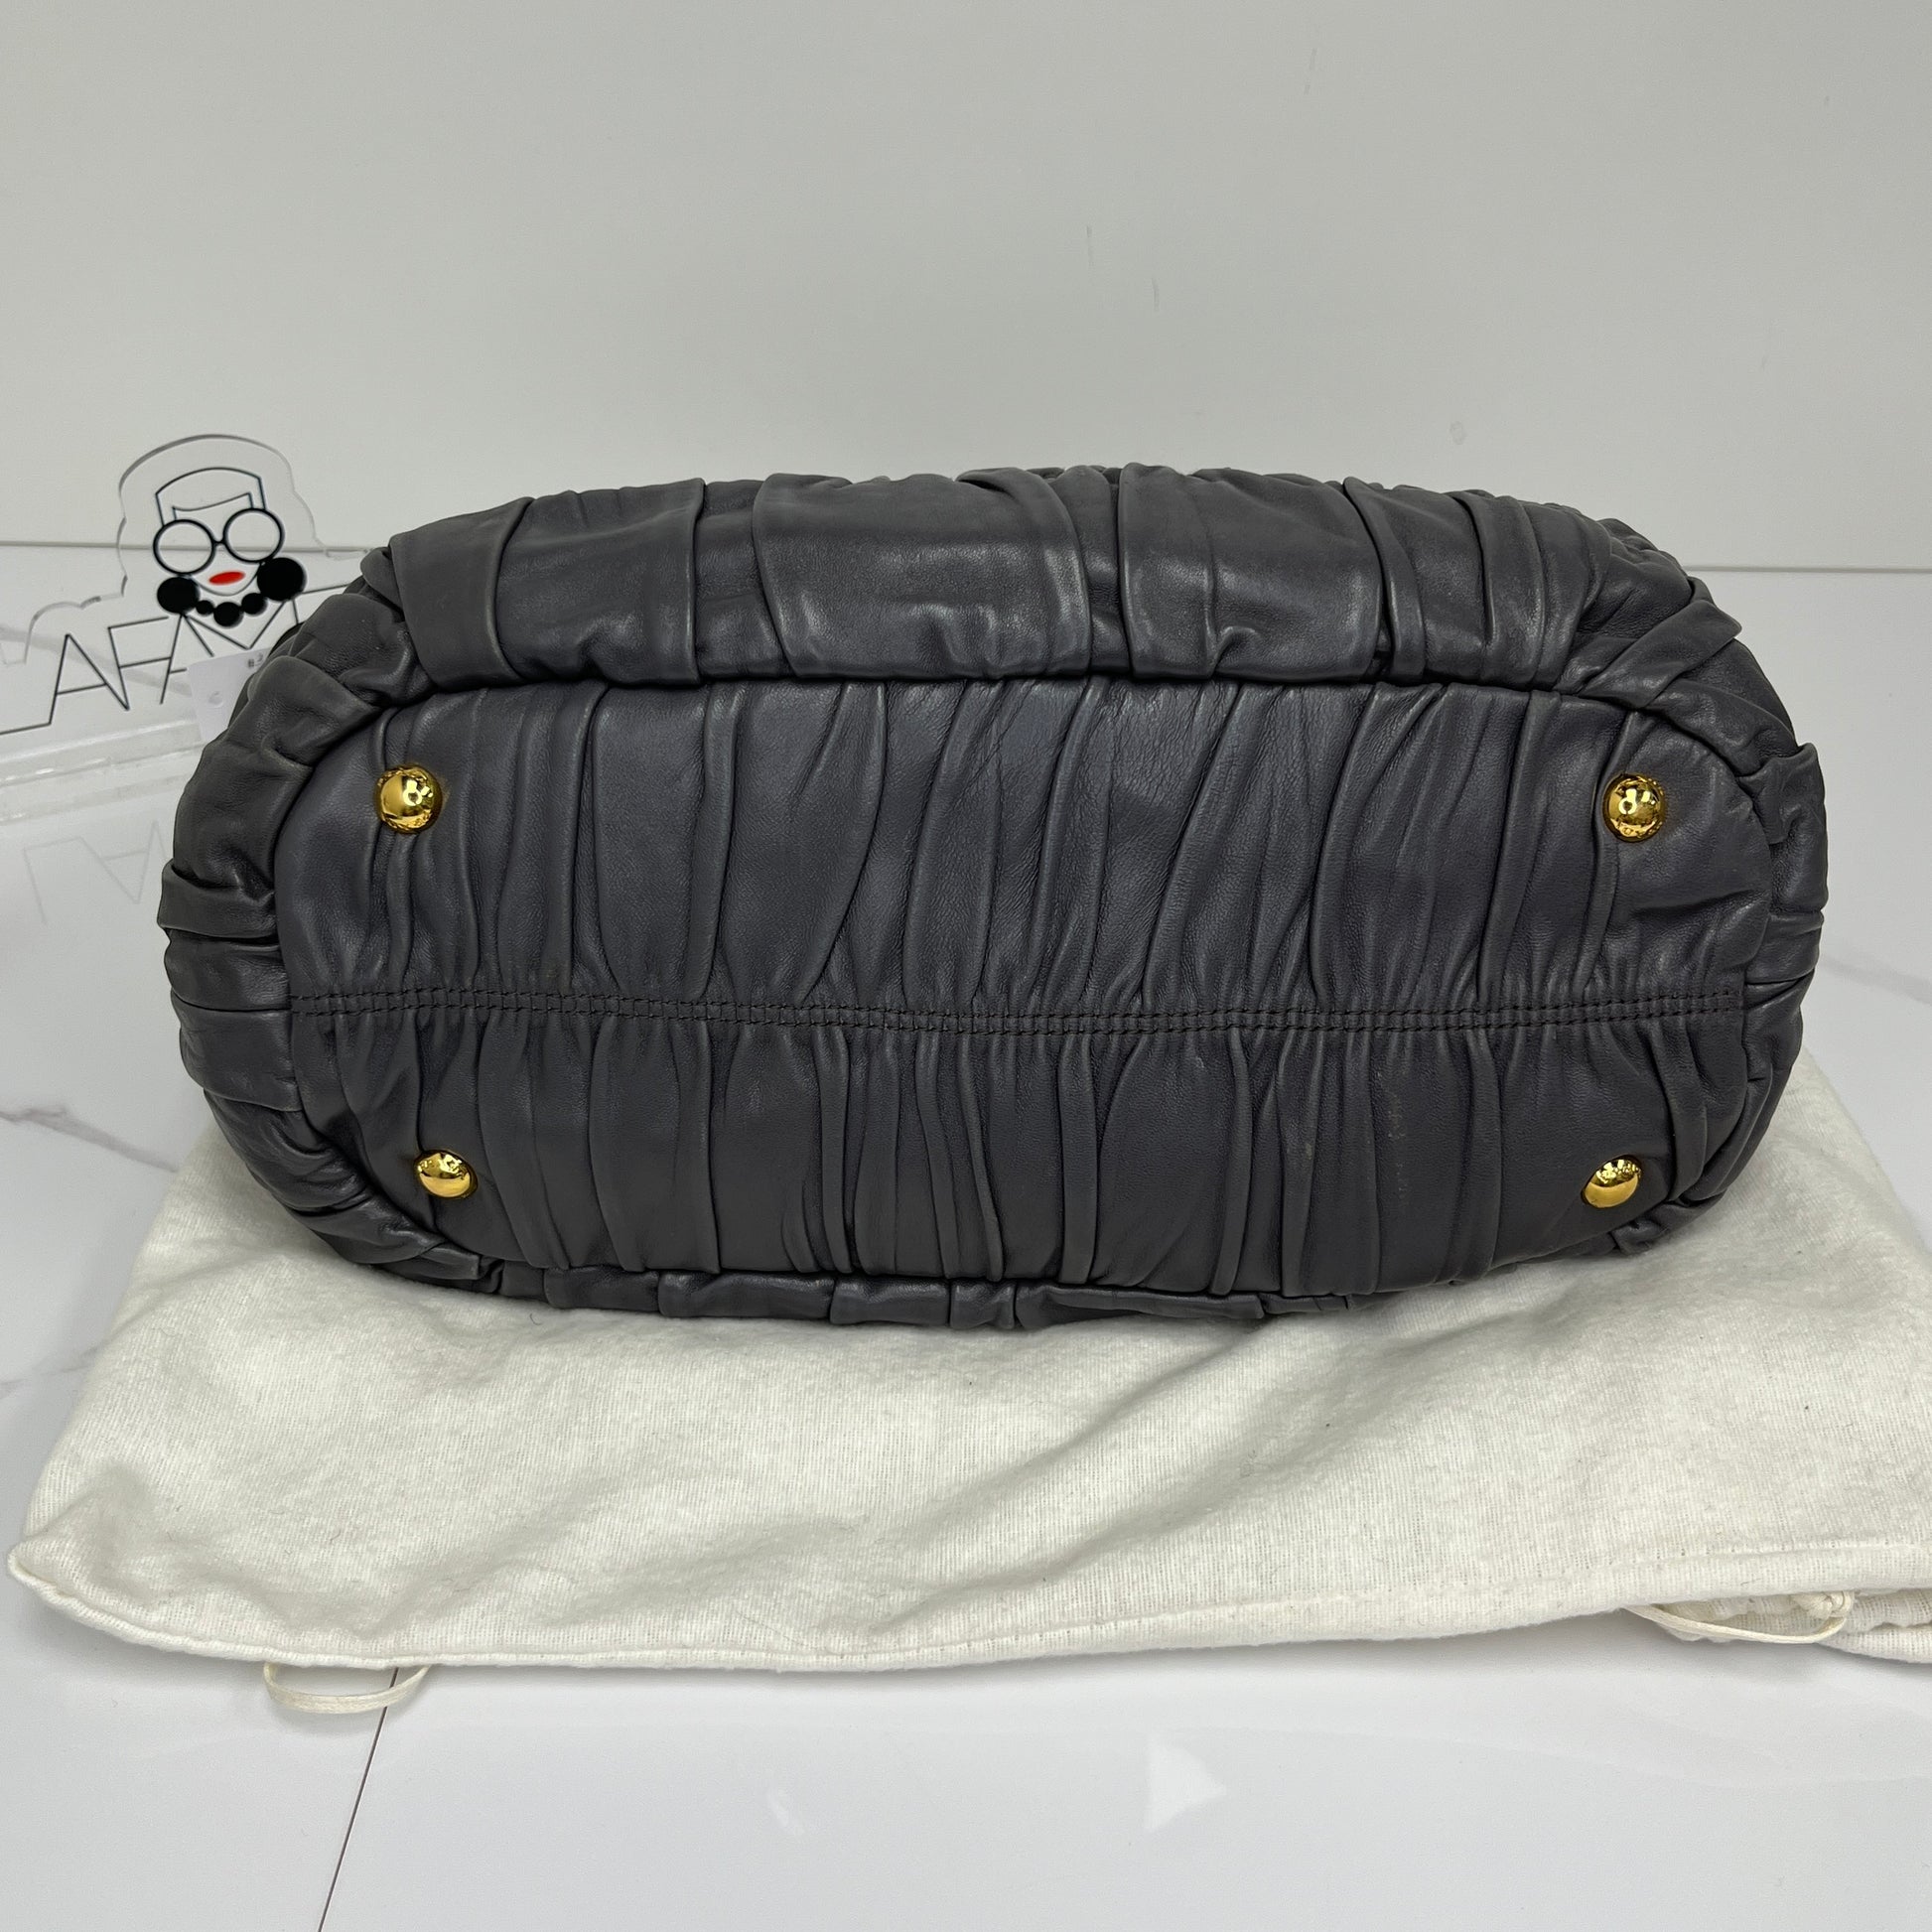 Prada Tessuto Graufe Handbag - Lafayette Consignment